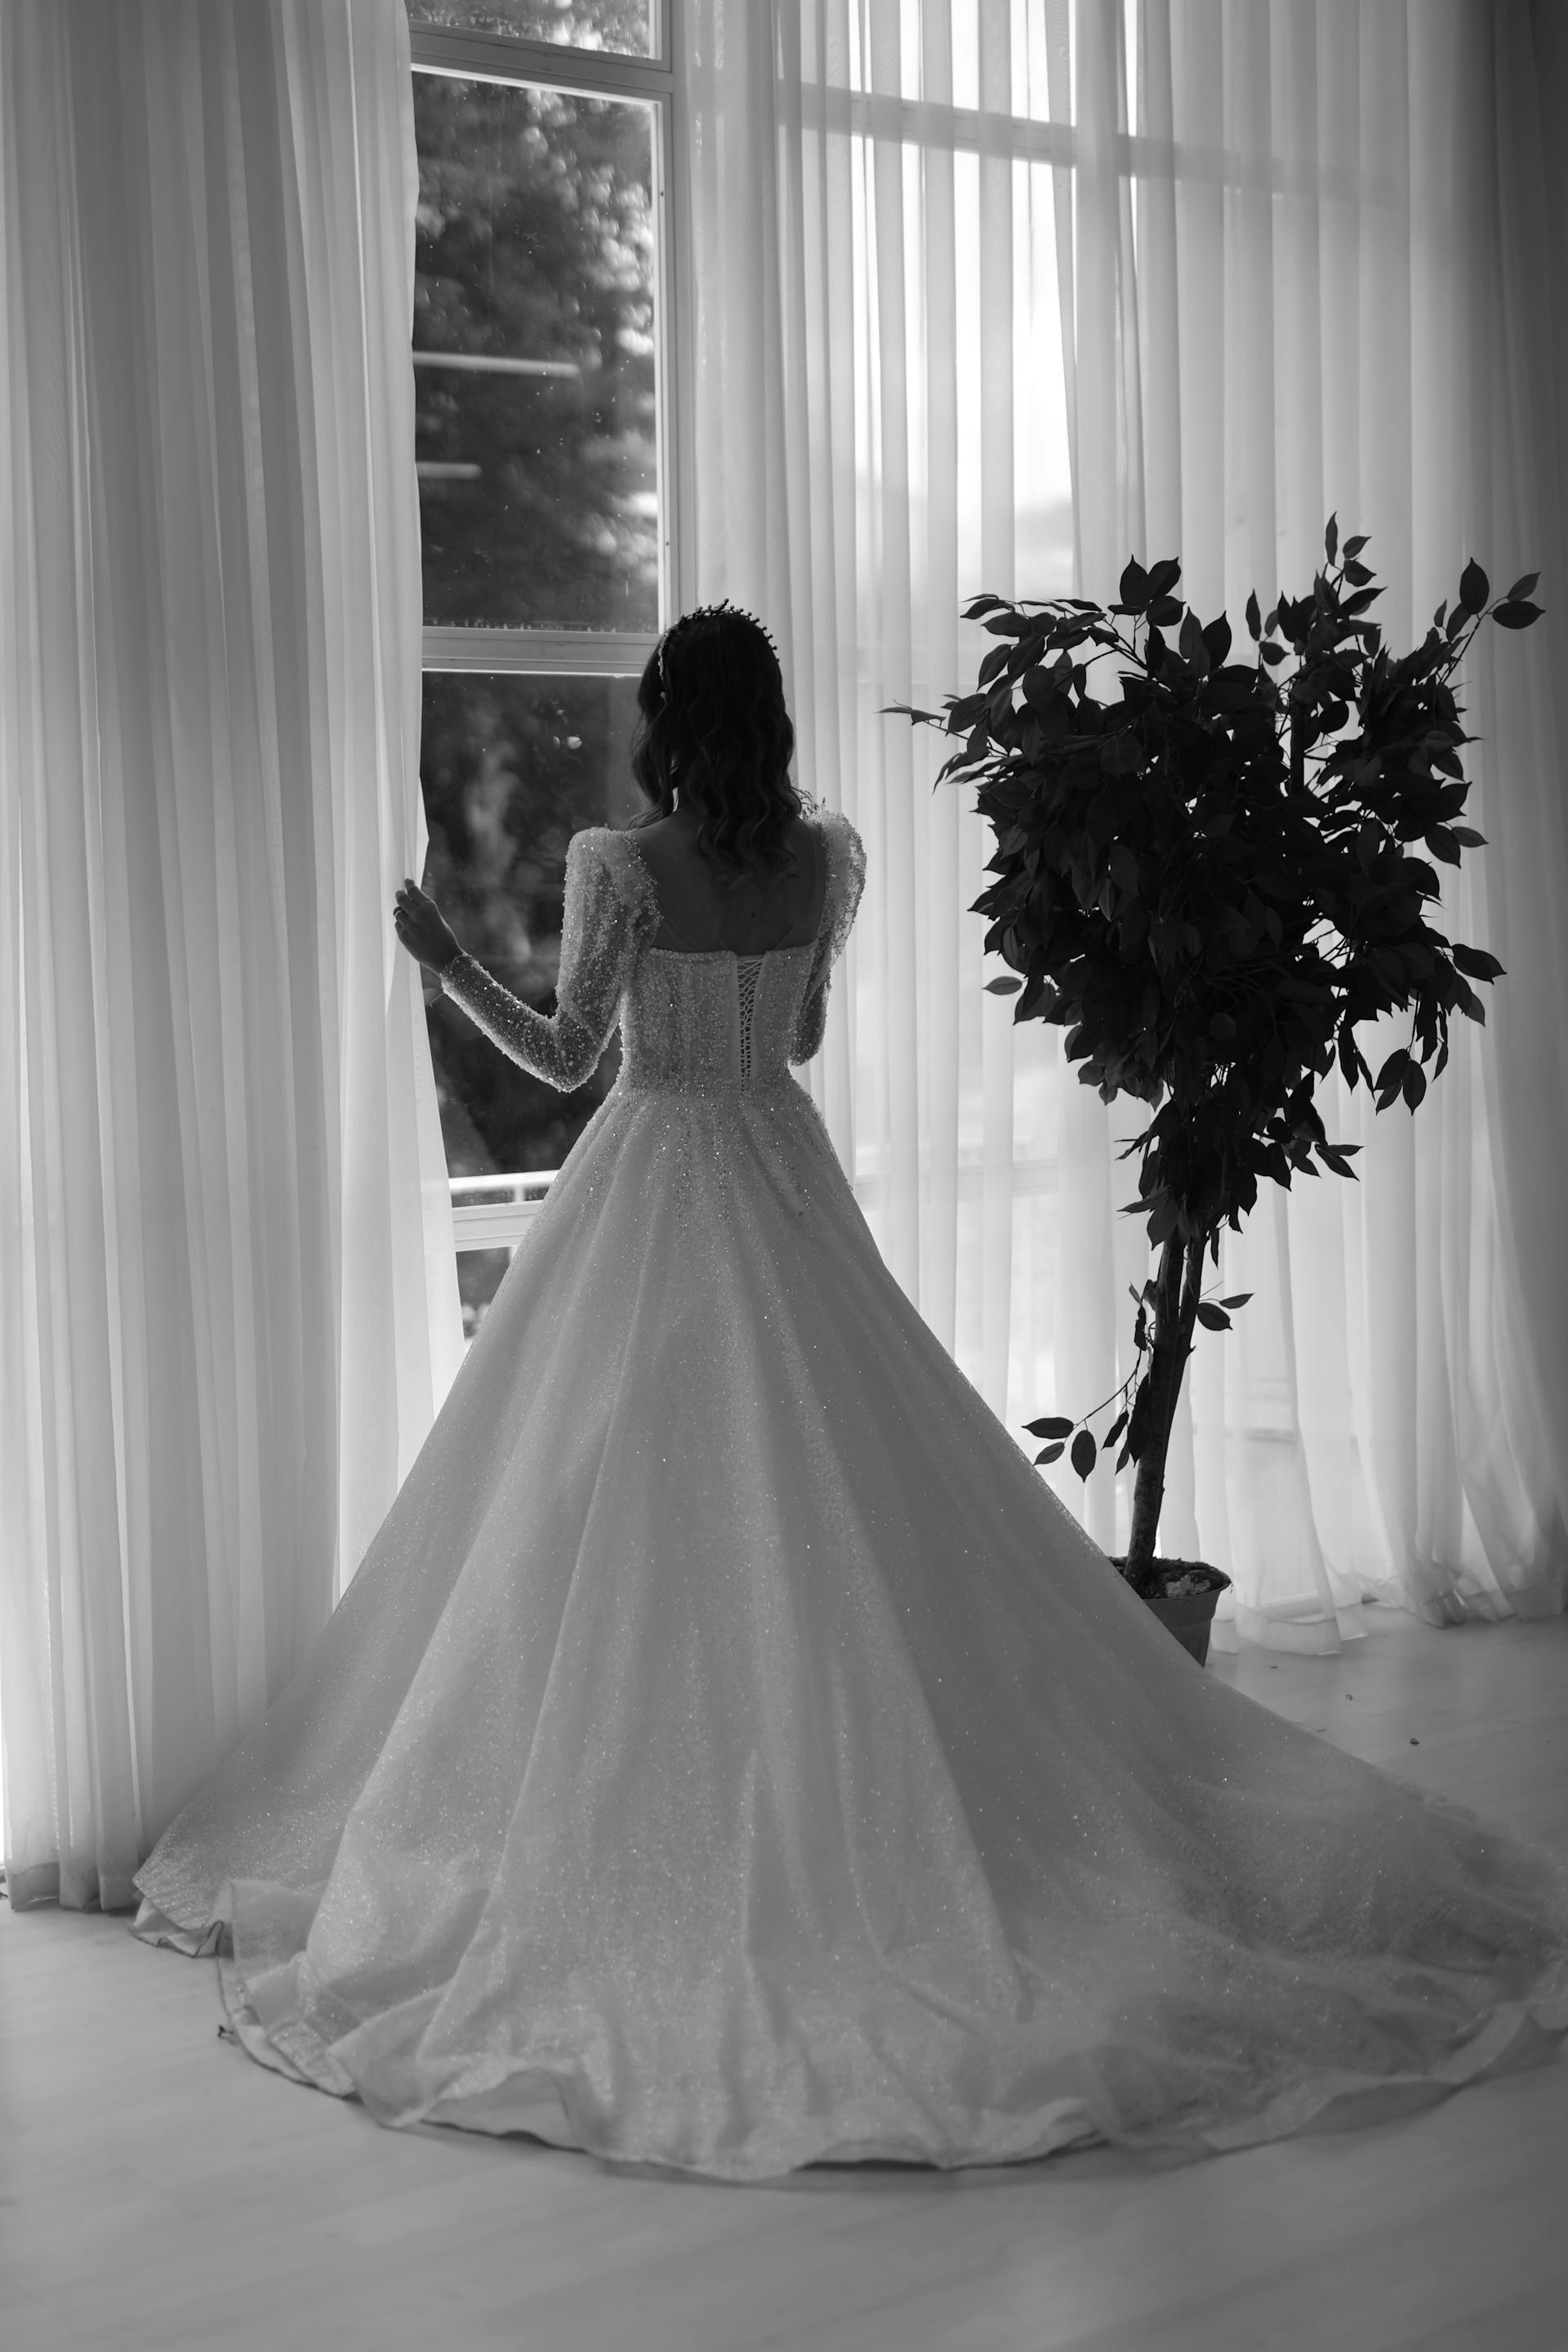 A bride in a dressing room | Source: Pexels